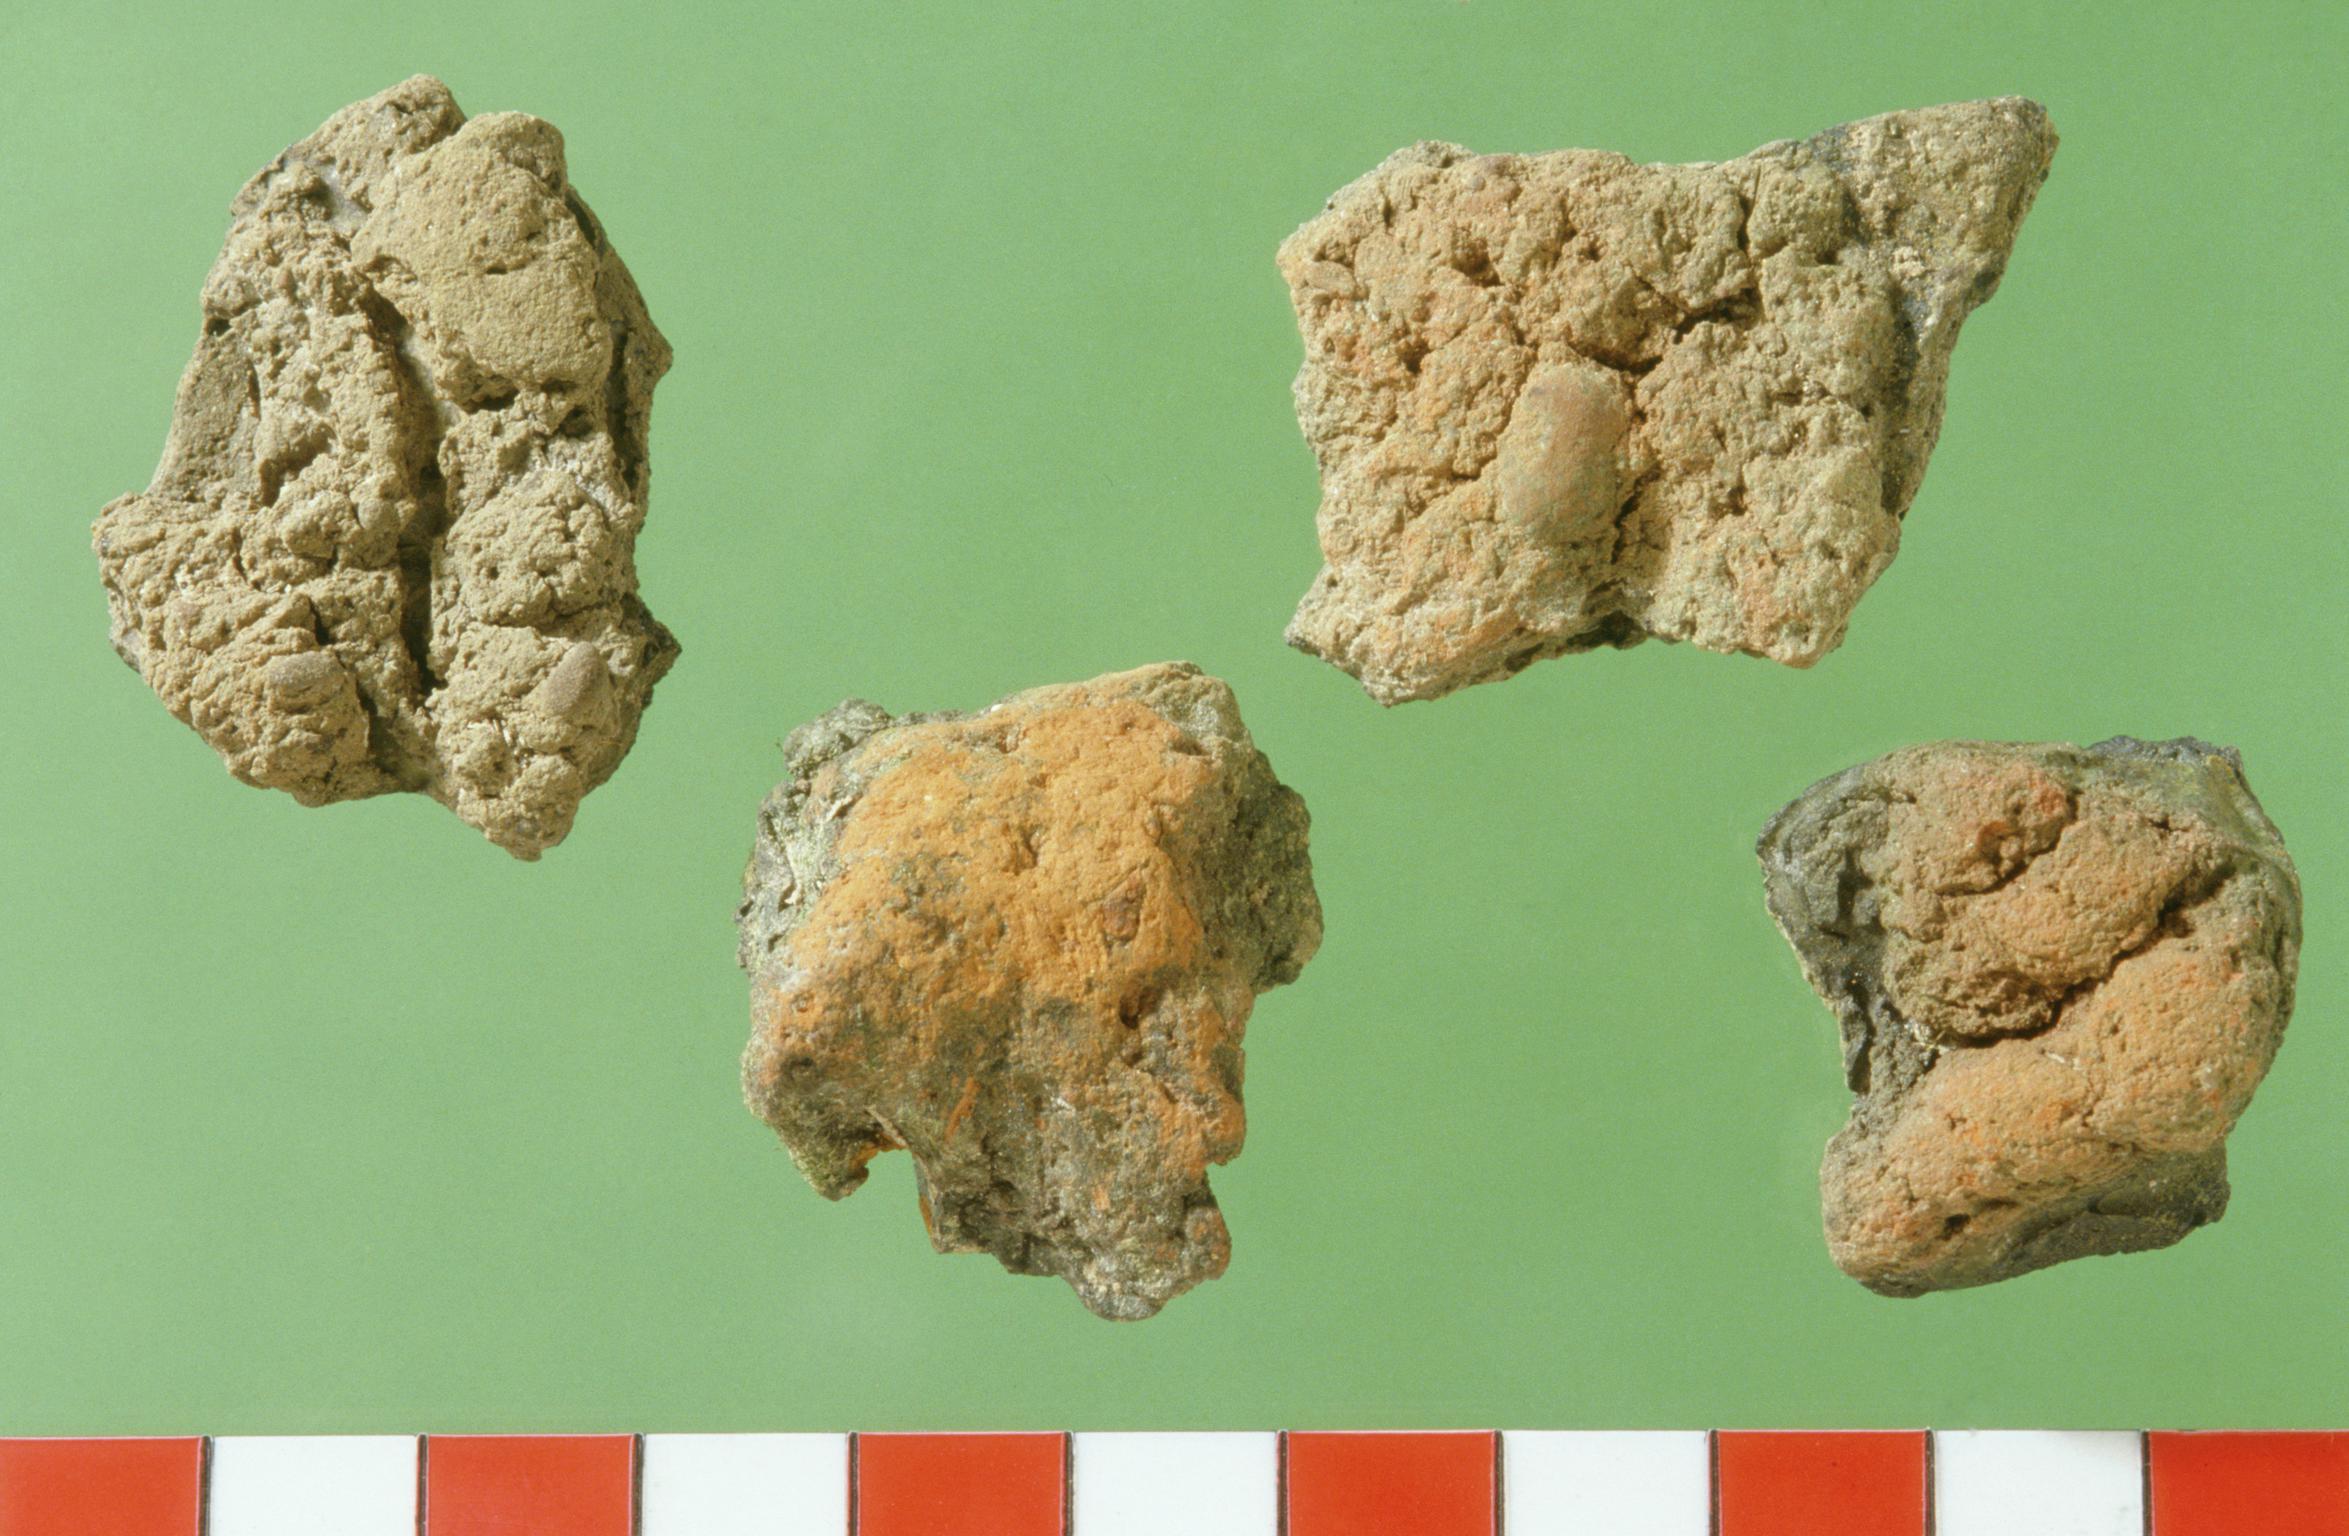 Finds from Llangorse Crannog excavation